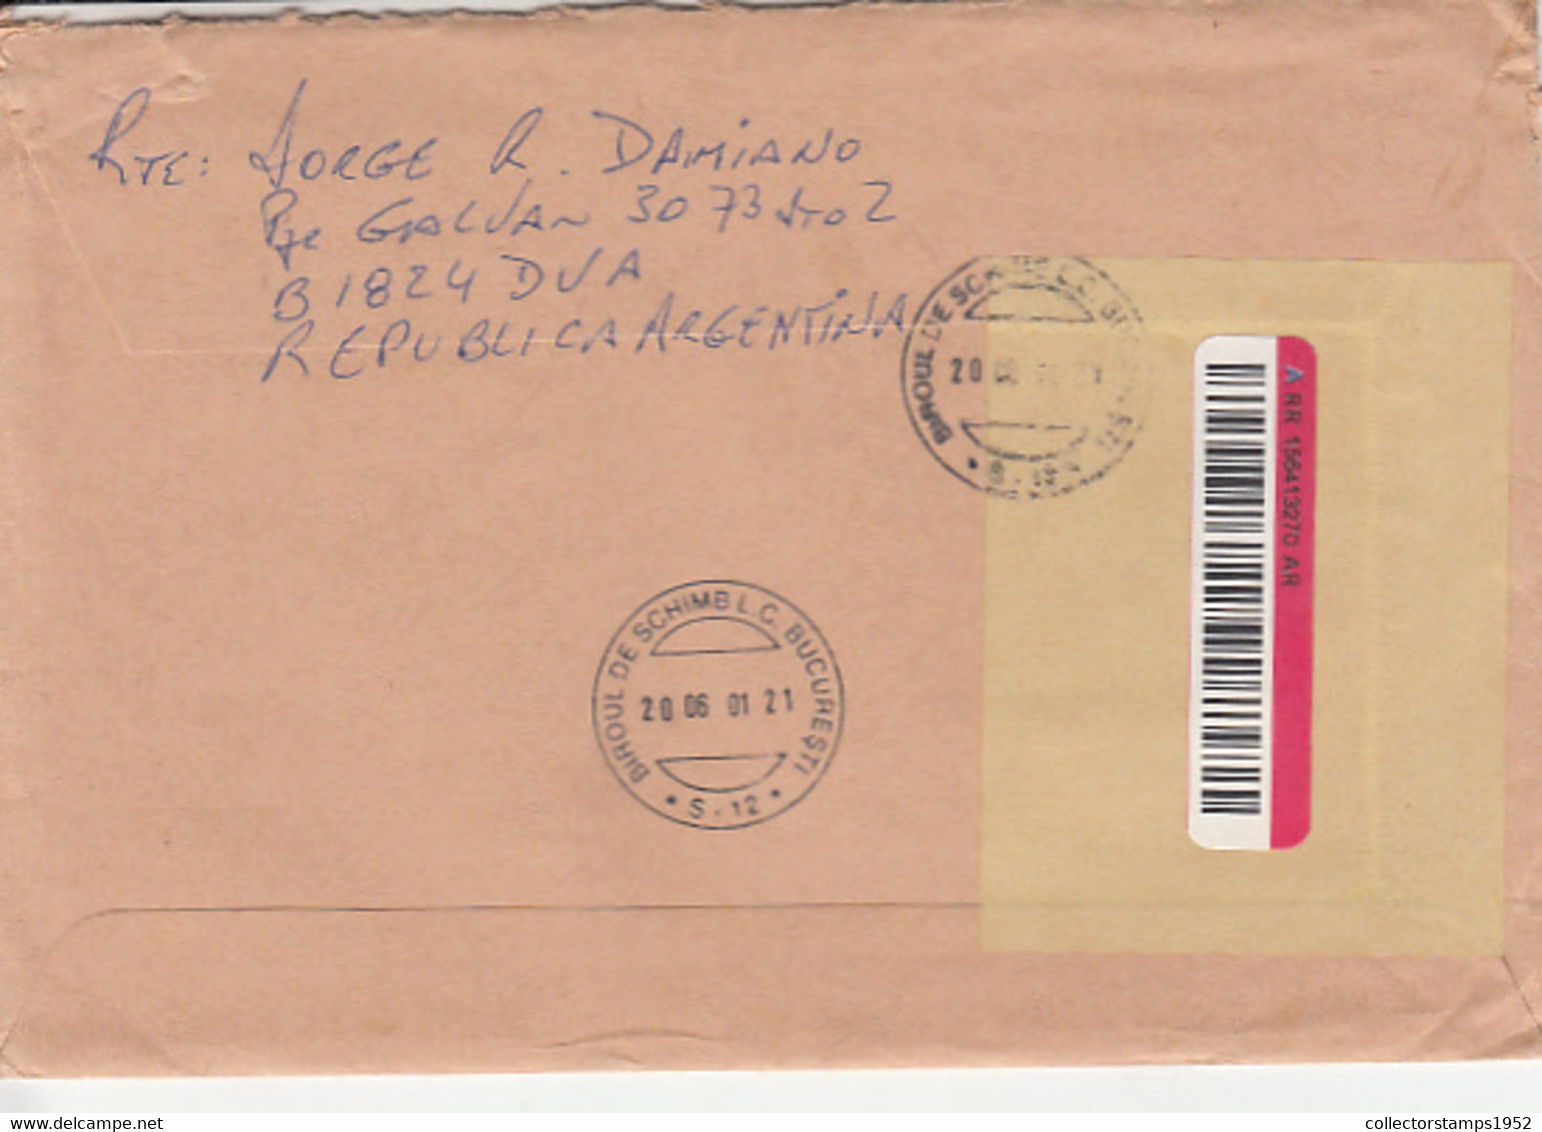 8619FM- BARCODES, AMOUNT 5.25MACHINE PRINTED STICKER STAMP ON REGISTERED COVER, 2001, ARGENTINA - Cartas & Documentos